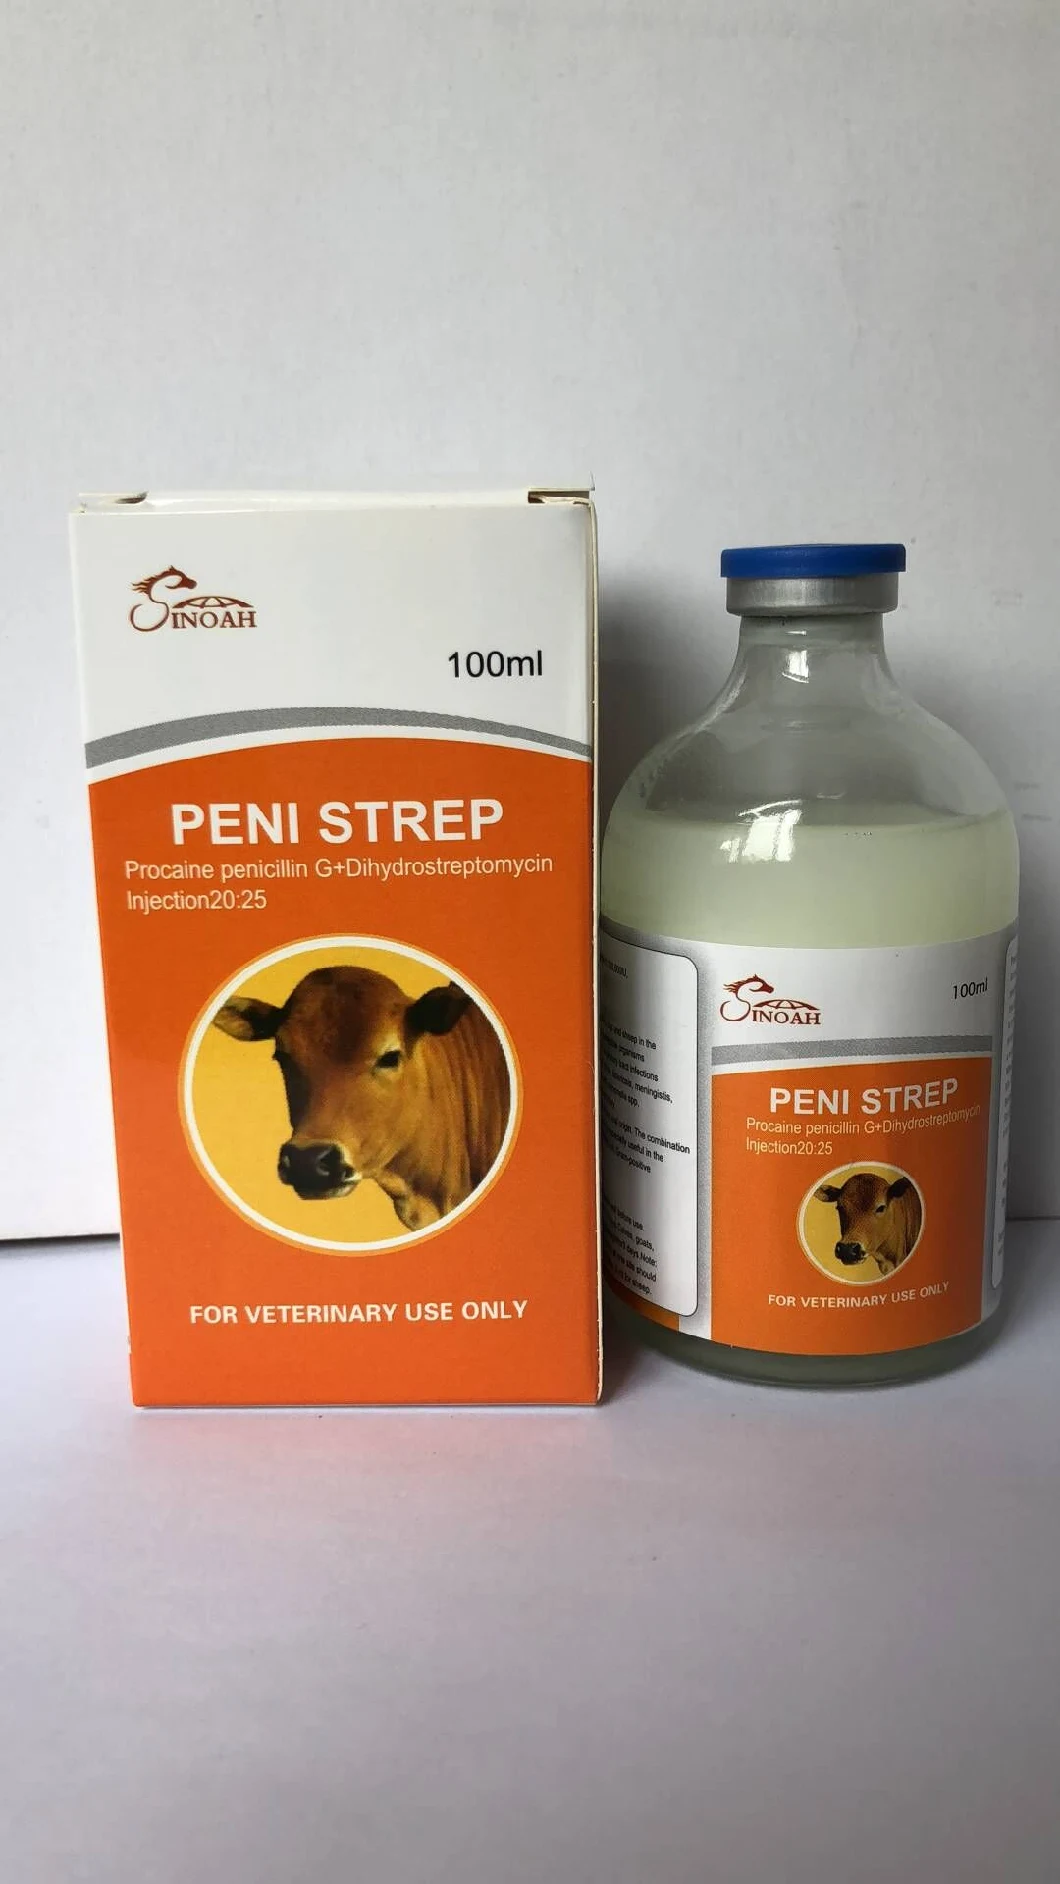 Ivermection 1% Closantel 10% Injection Animal Health Medicine GMP Supplier